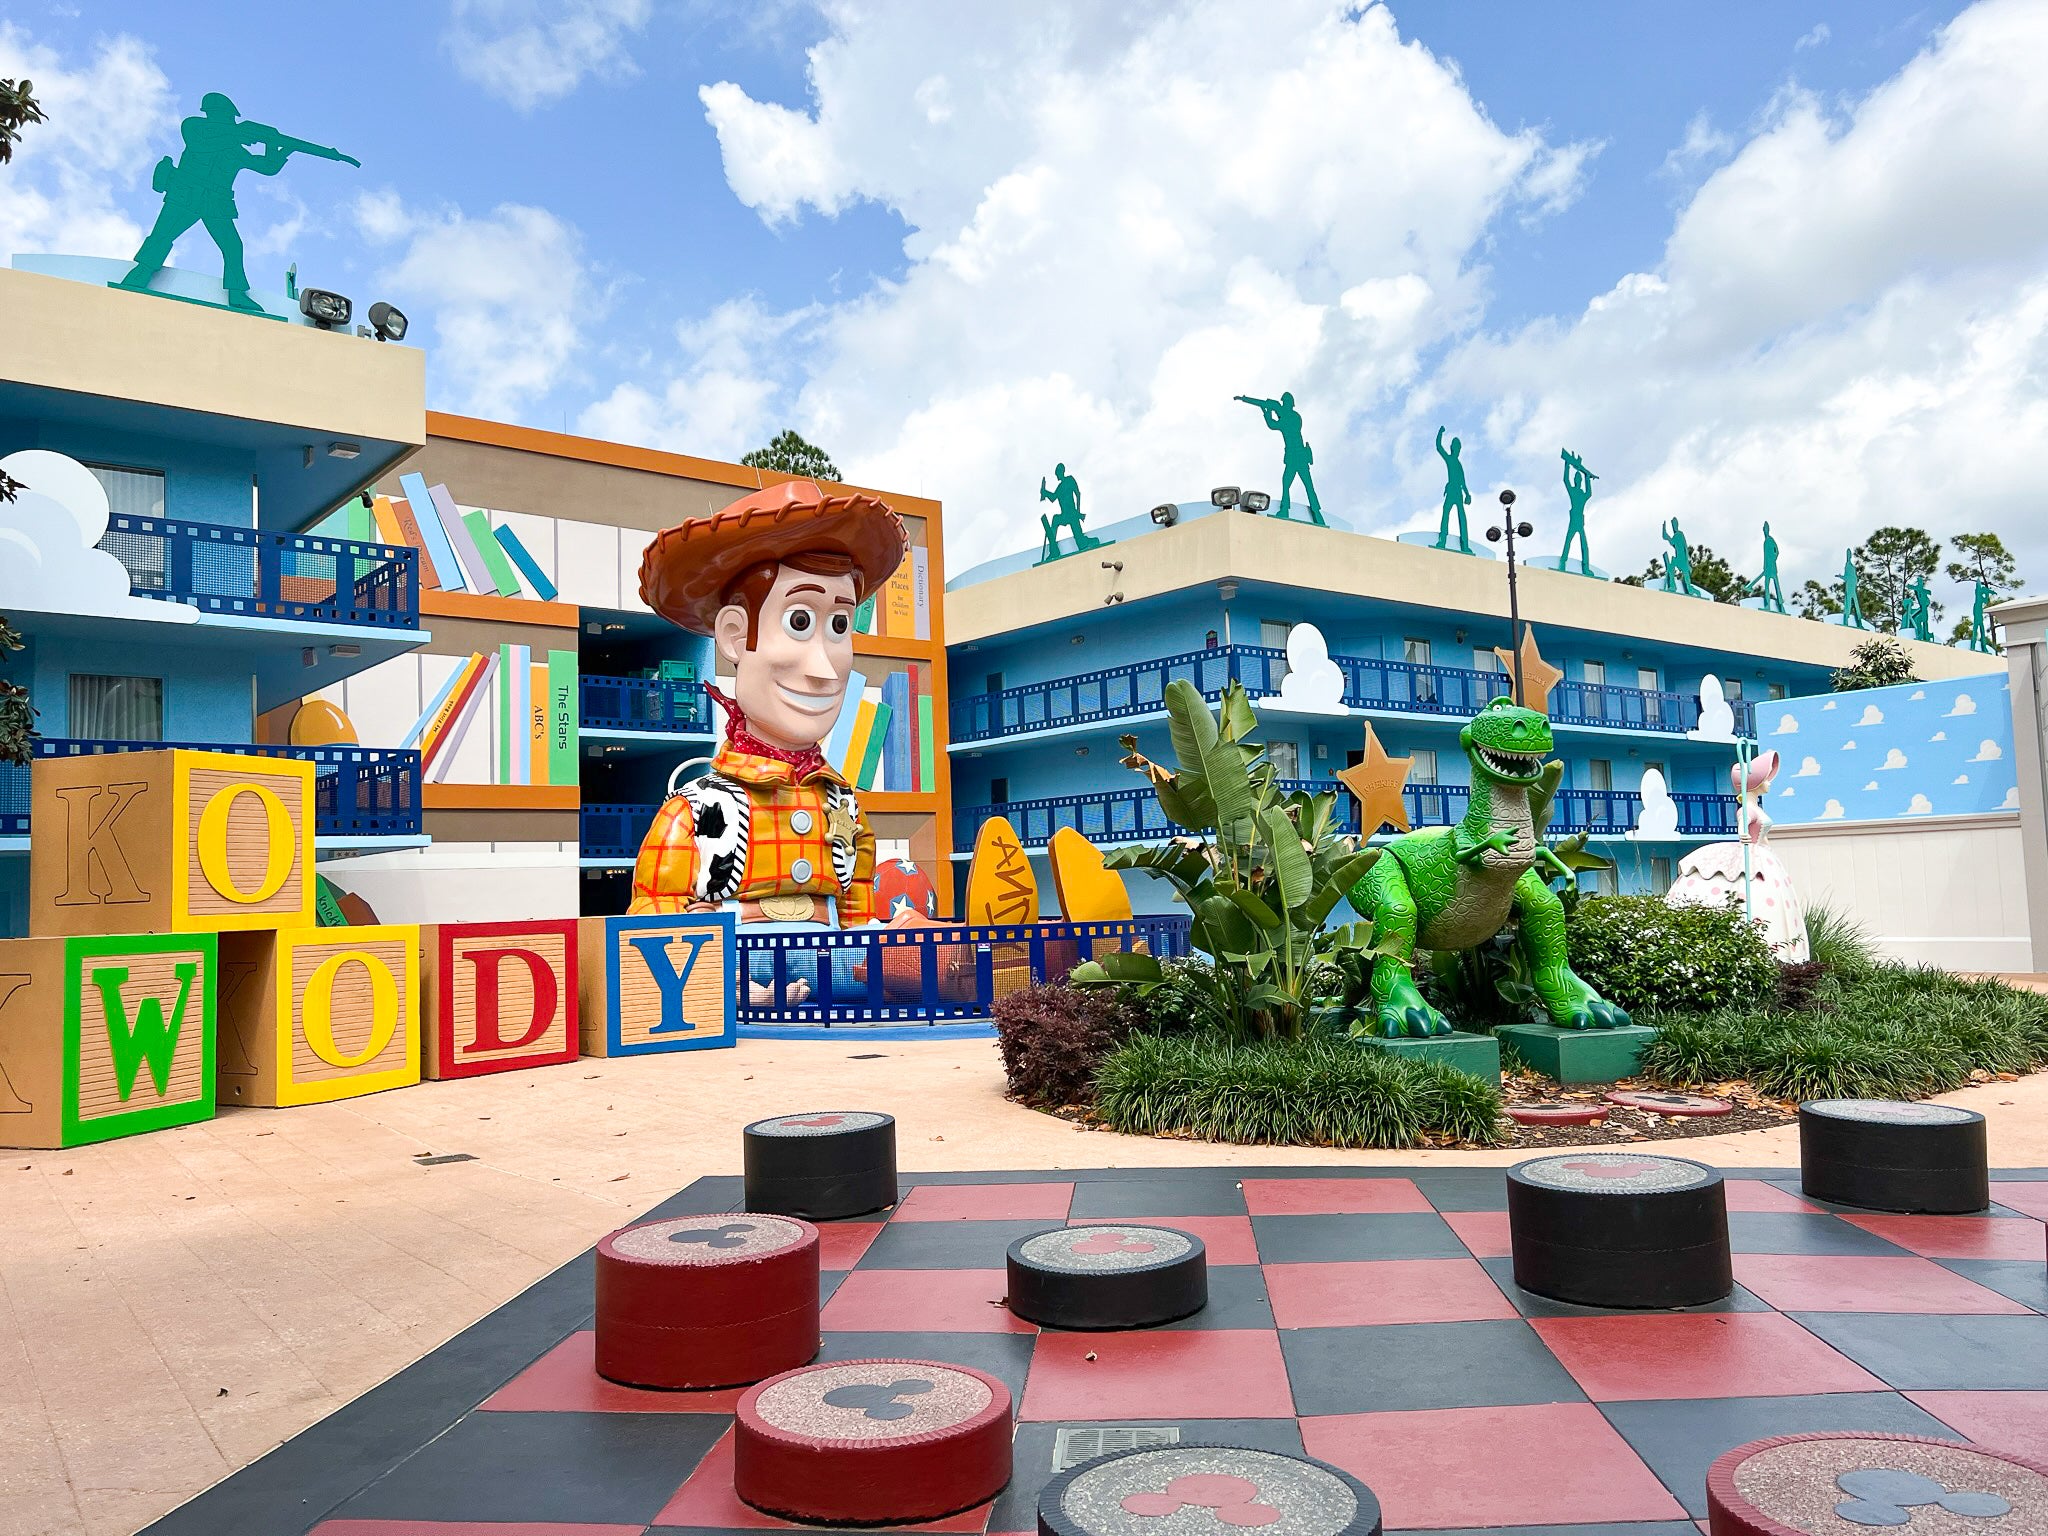 Disneys All Star Movie Resort Toy Story Woody rooms